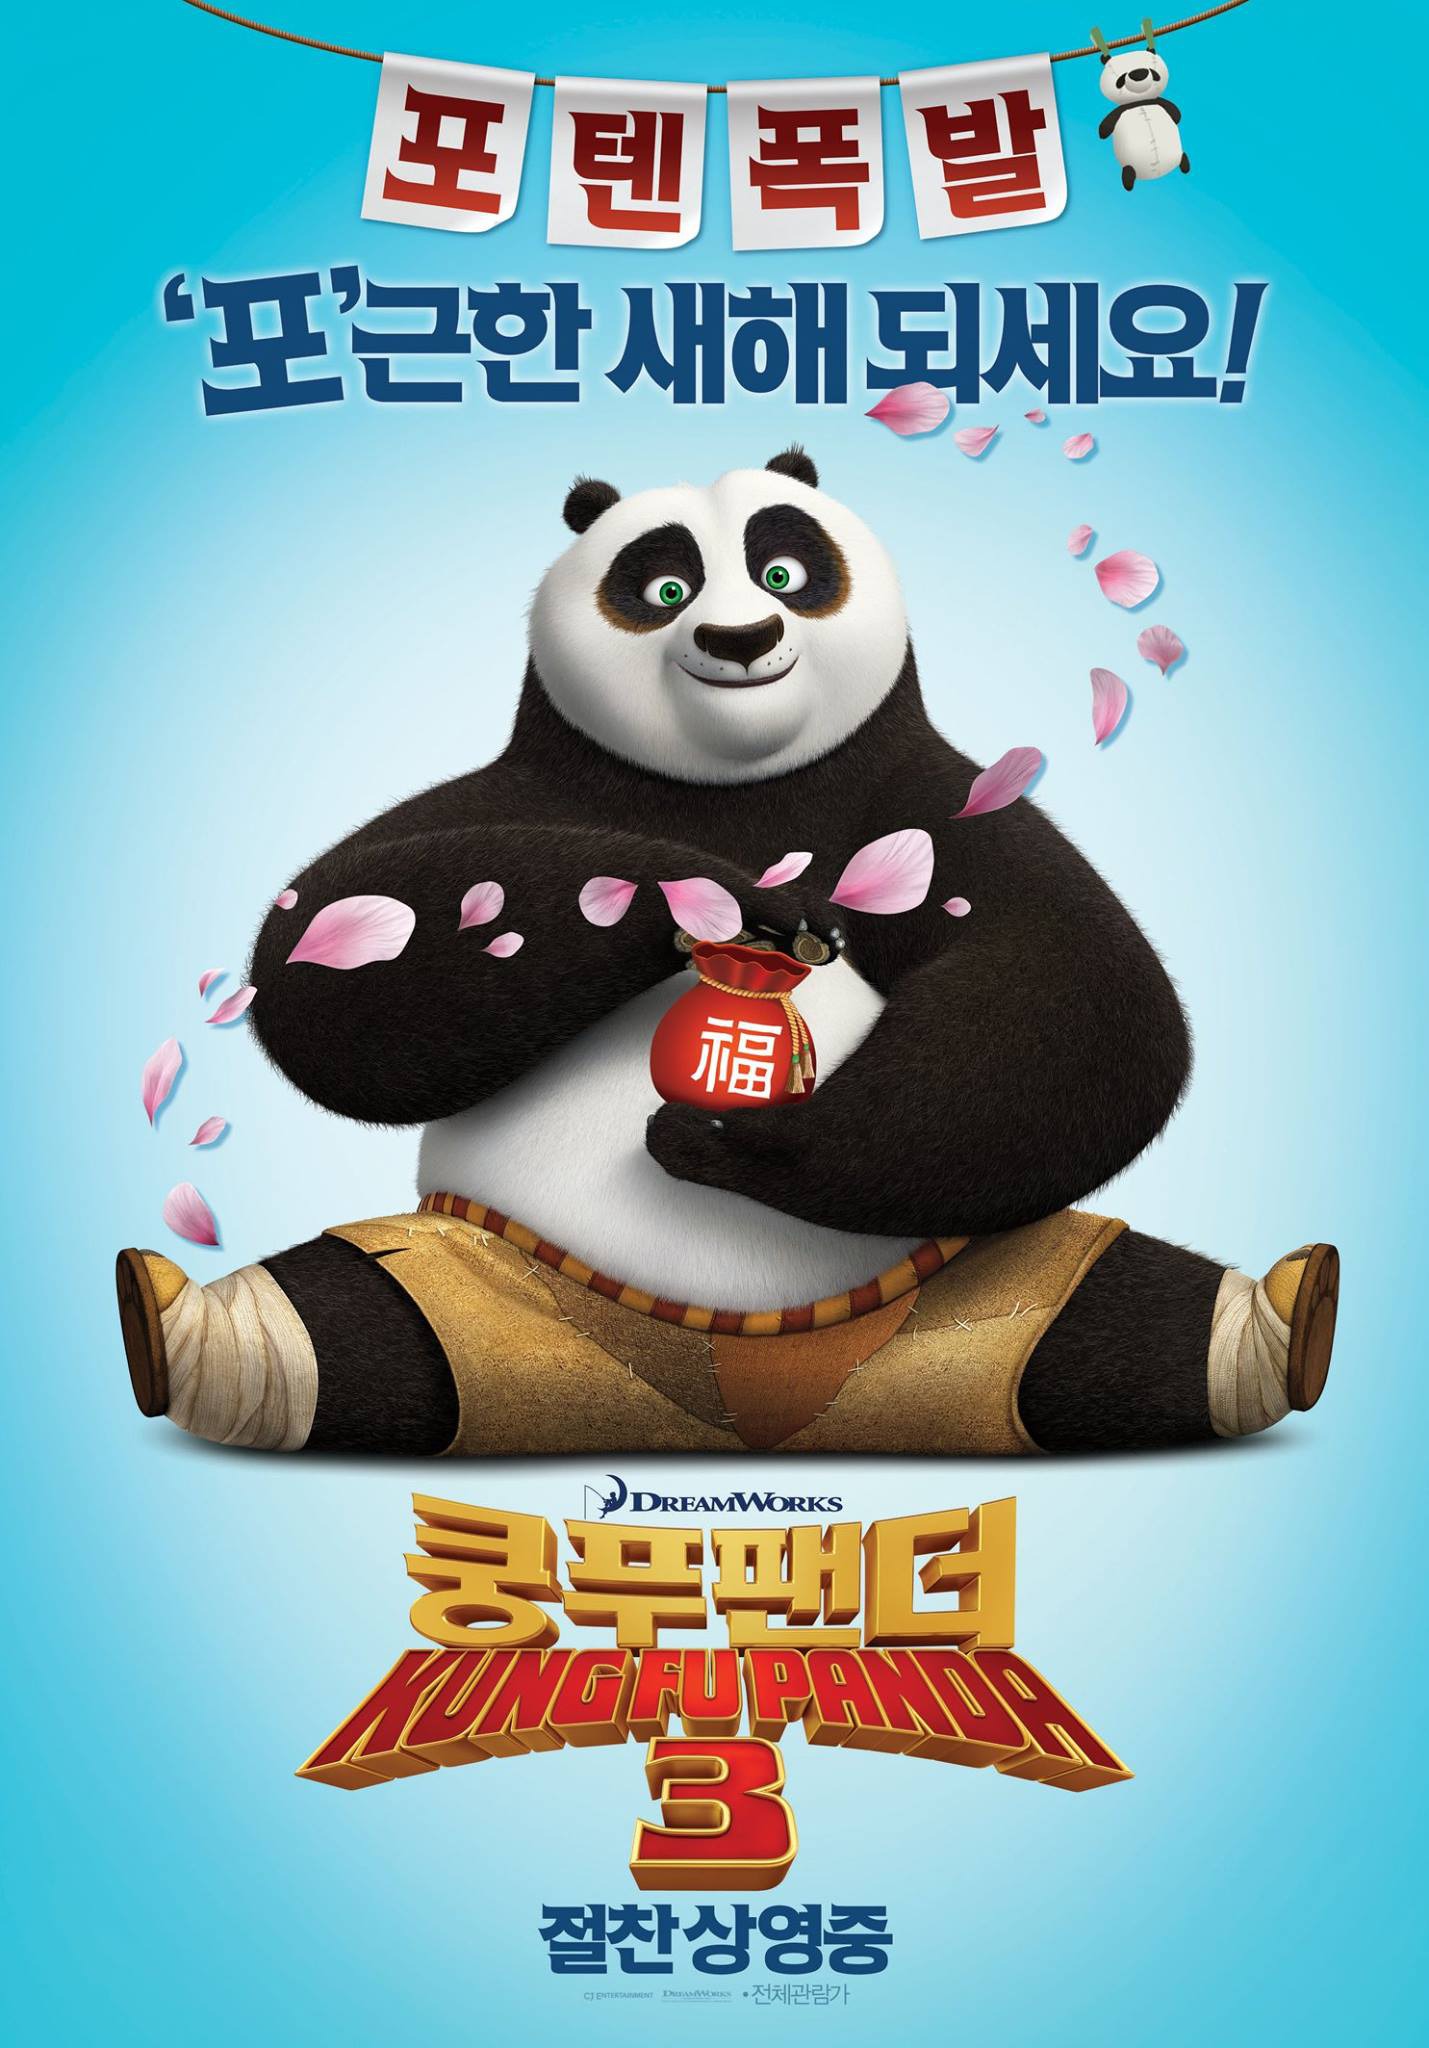 Mega Sized Movie Poster Image for Kung Fu Panda 3 (#12 of 22)